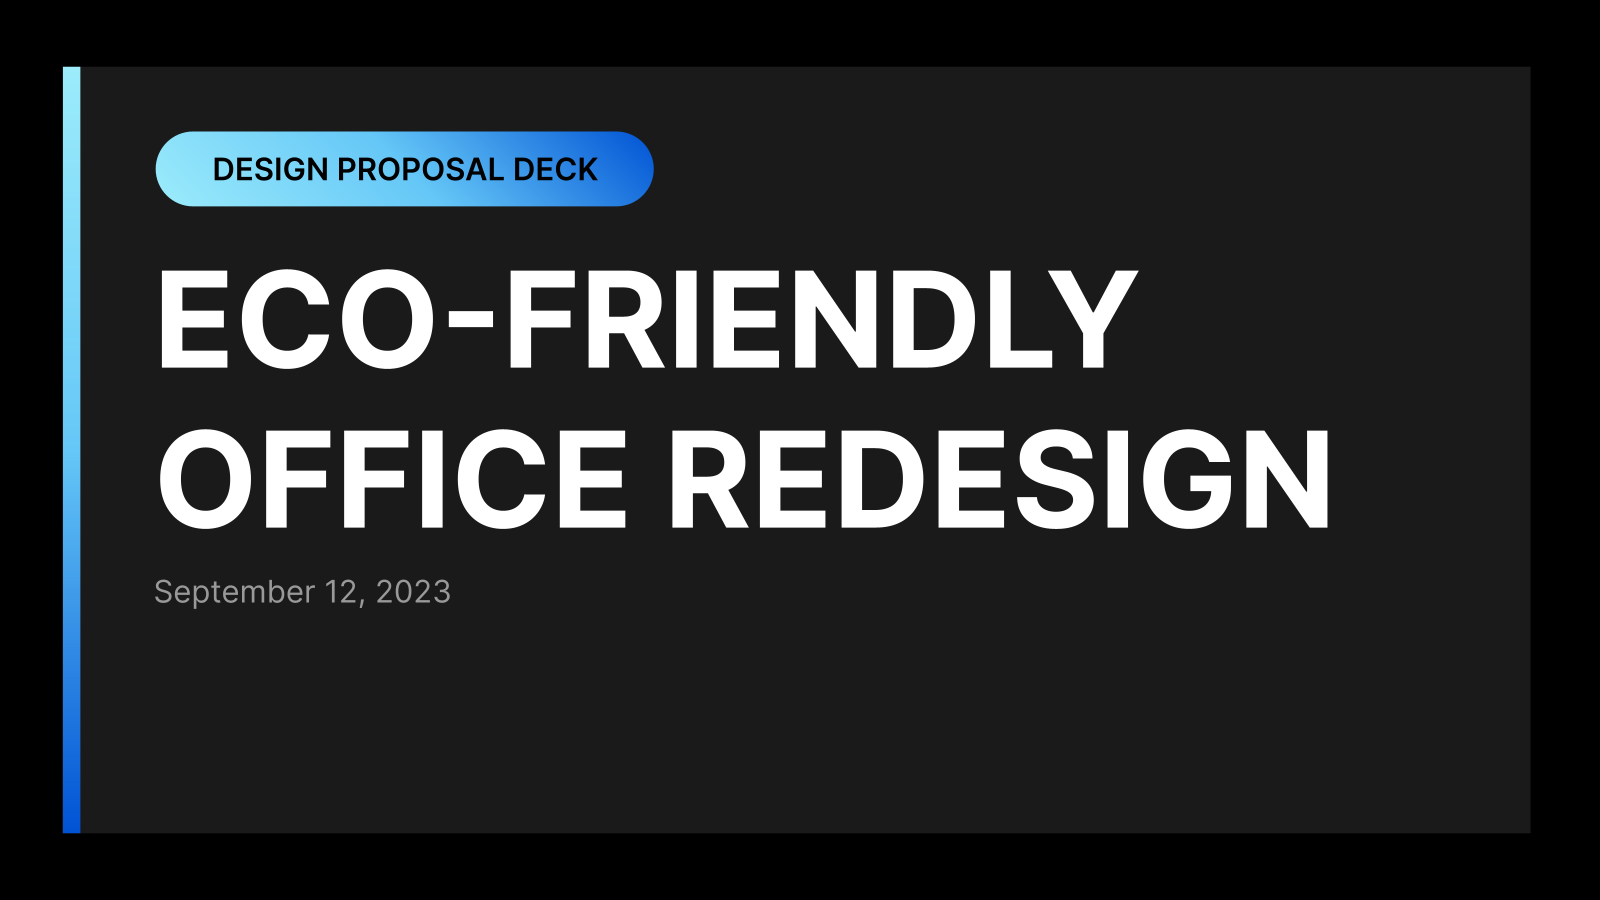 Design Proposal Deck